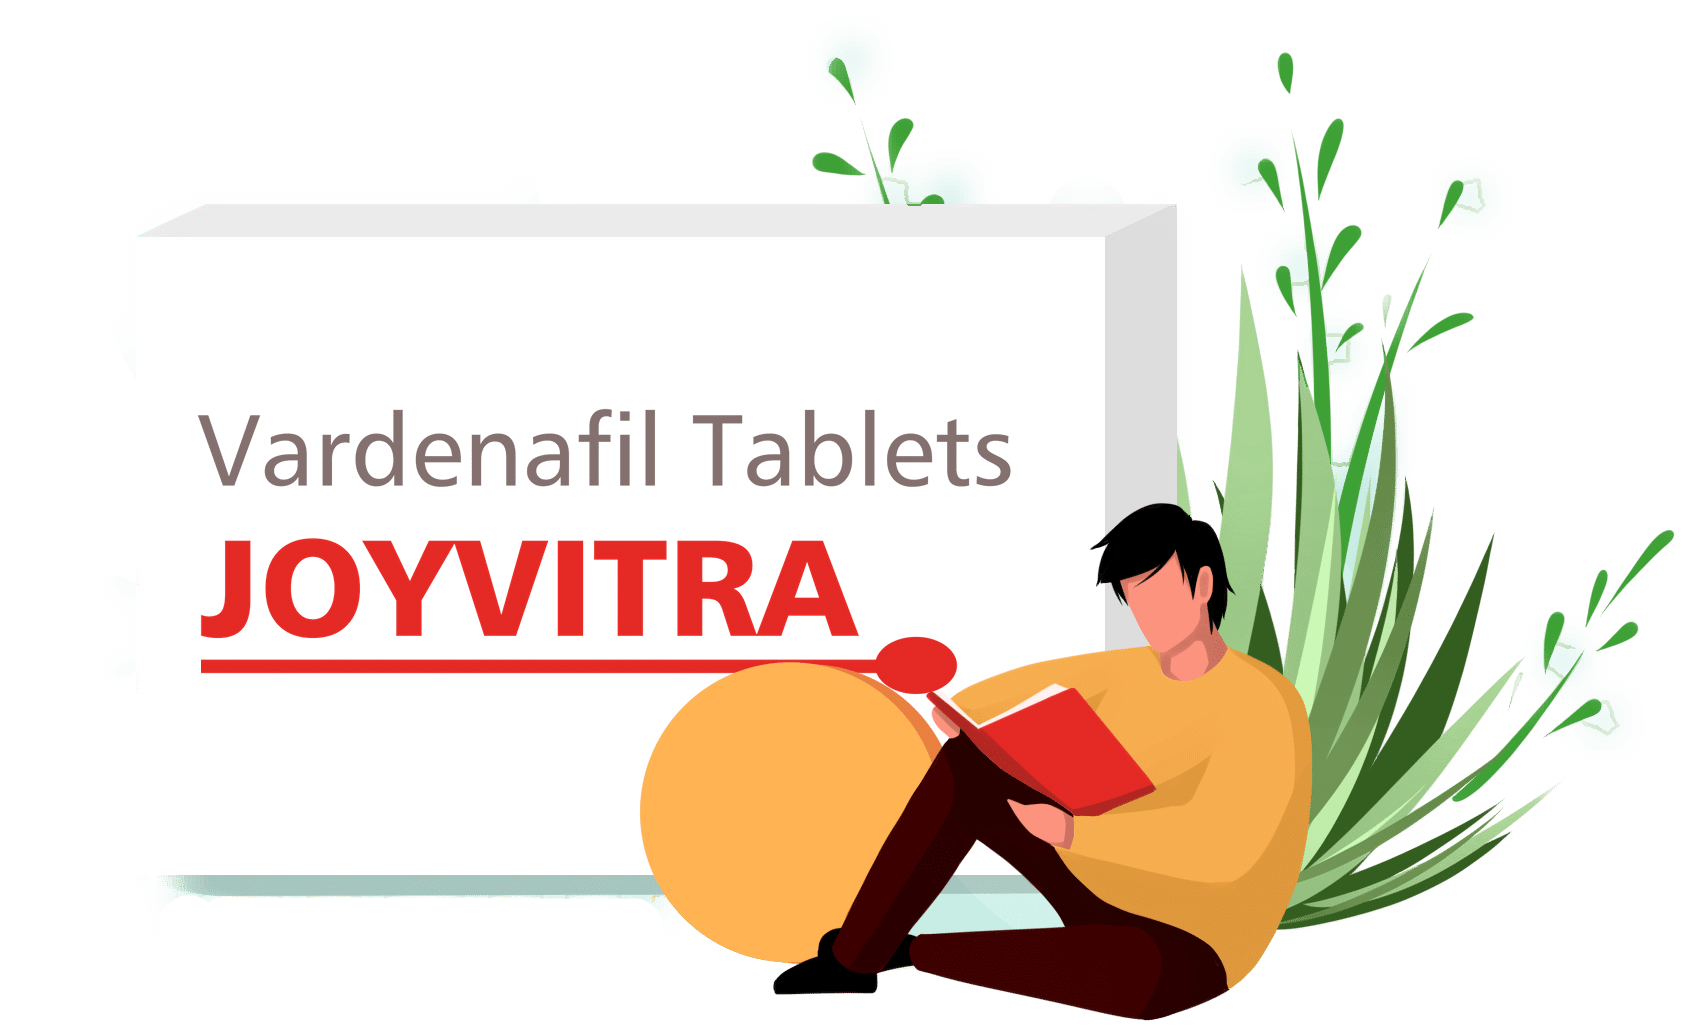 Guide to Joyvitra Drugs